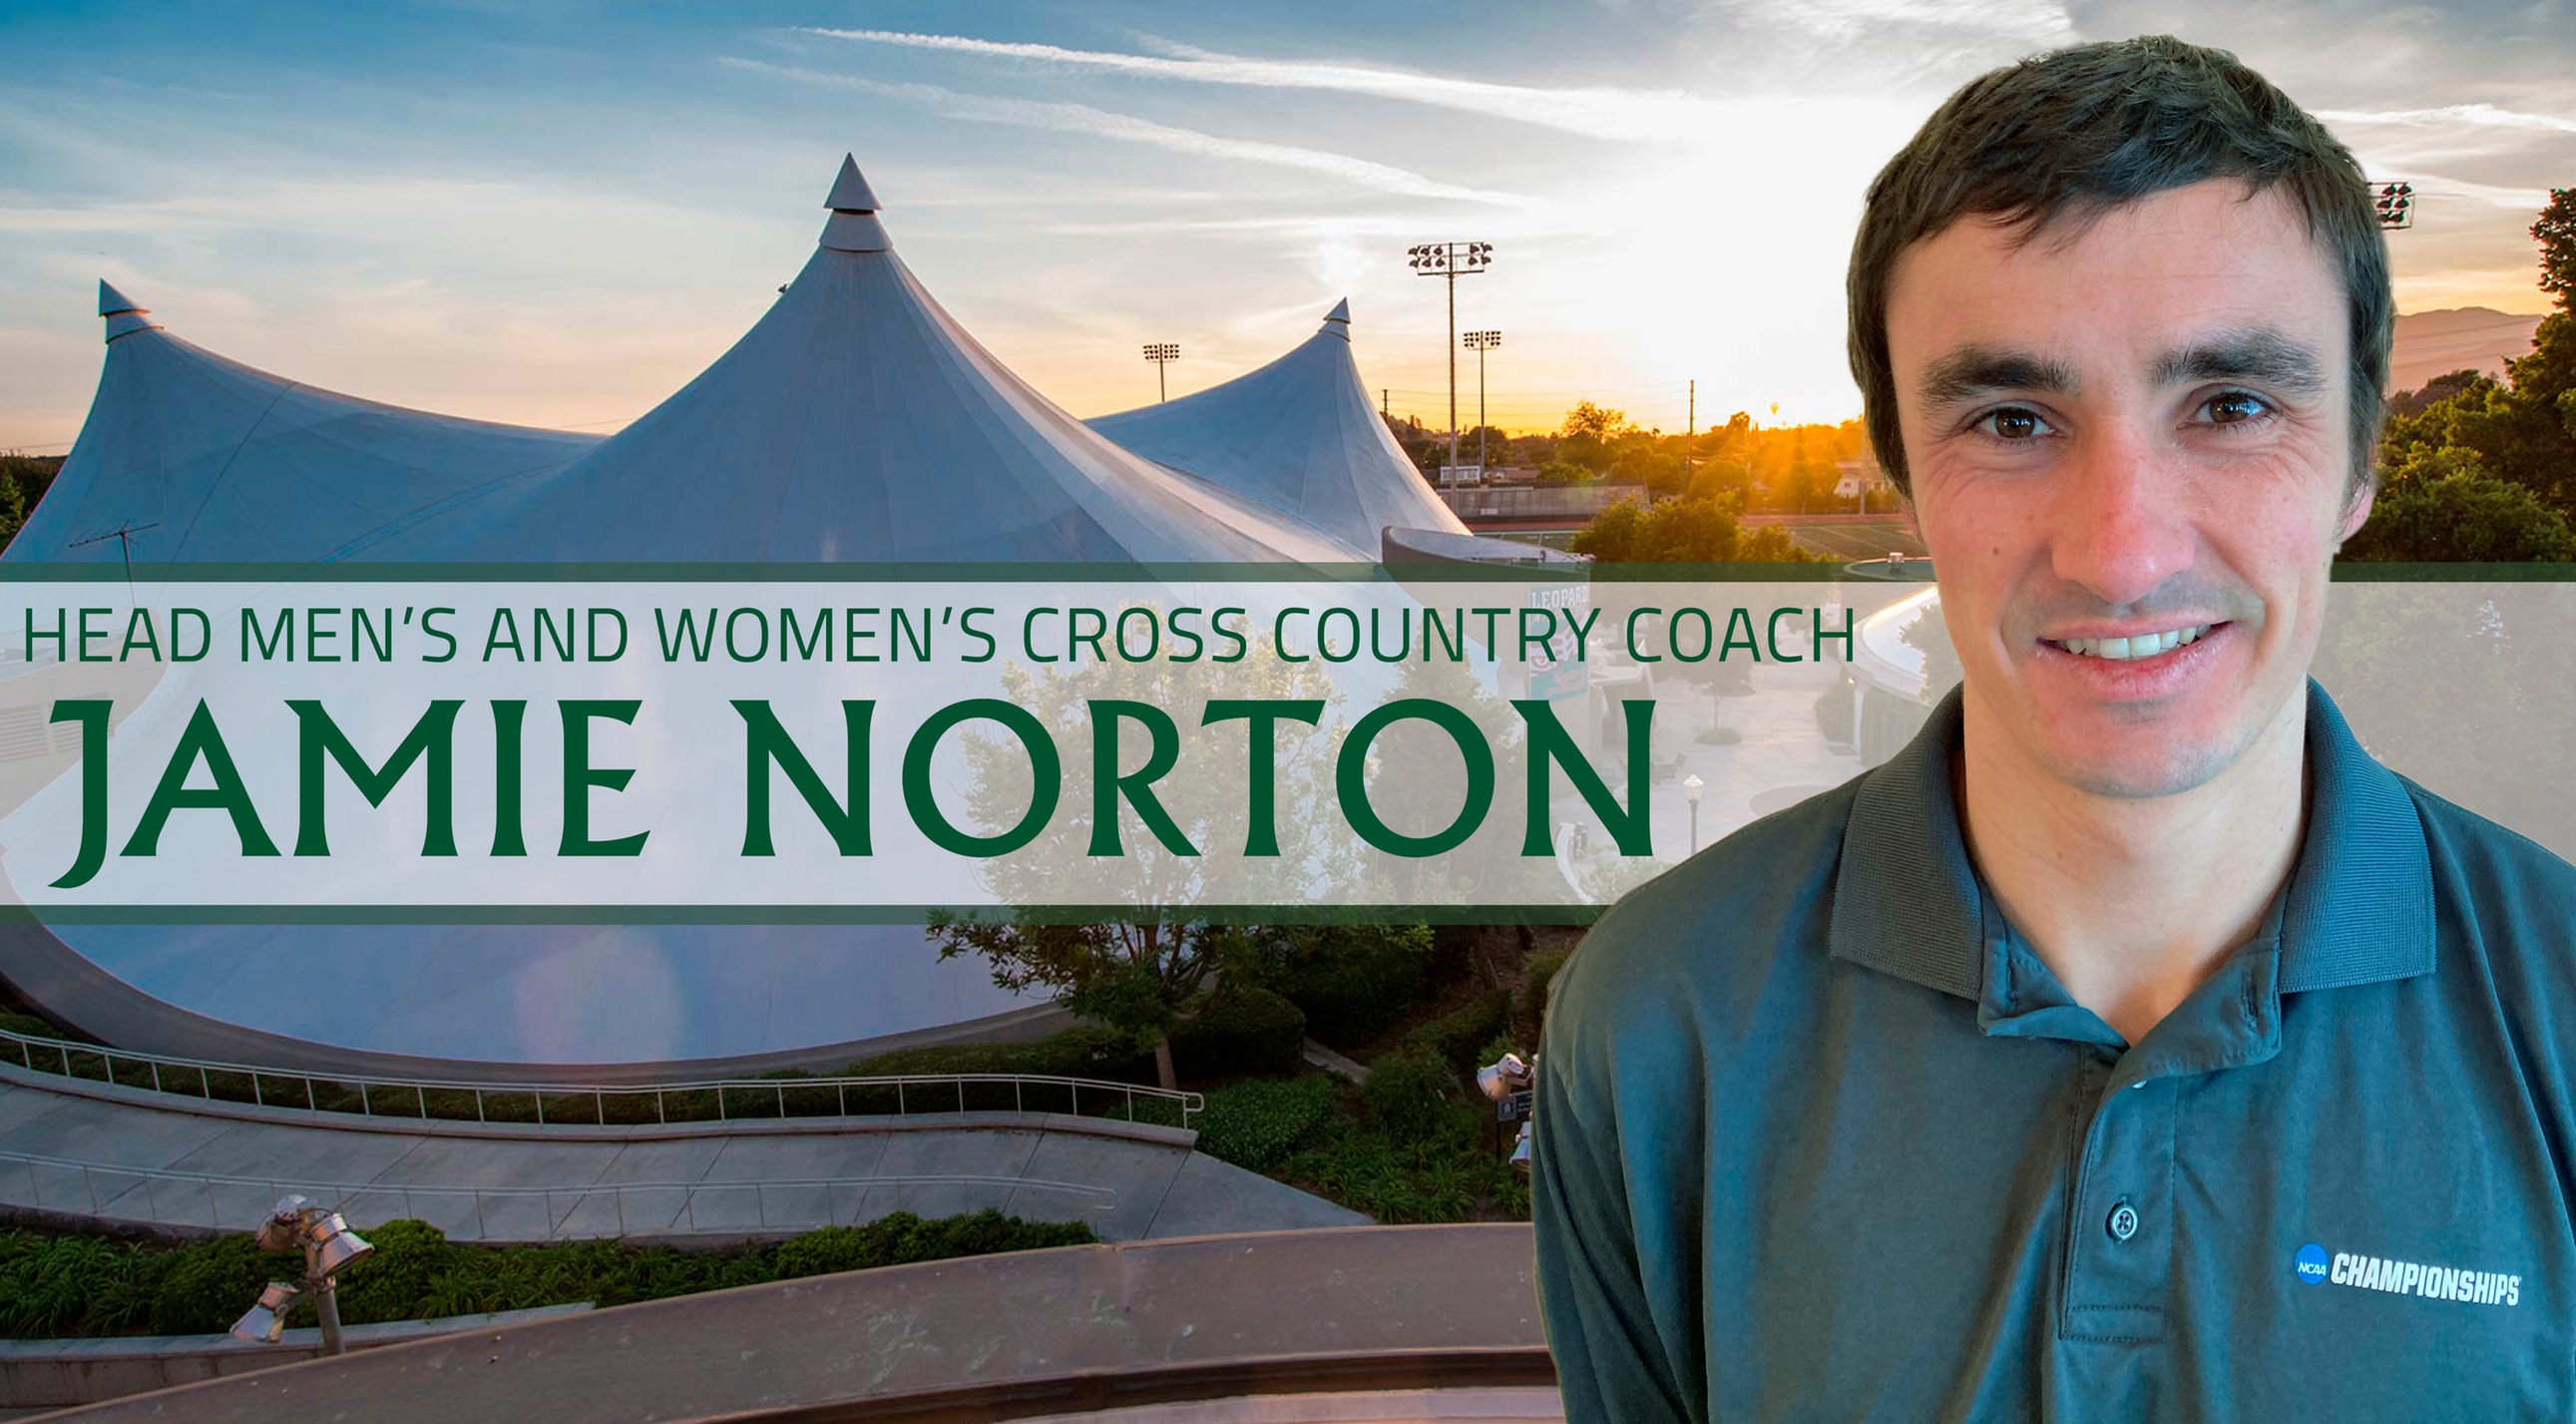 Jamie Norton Named Head Men's and Women's Cross Country Coach